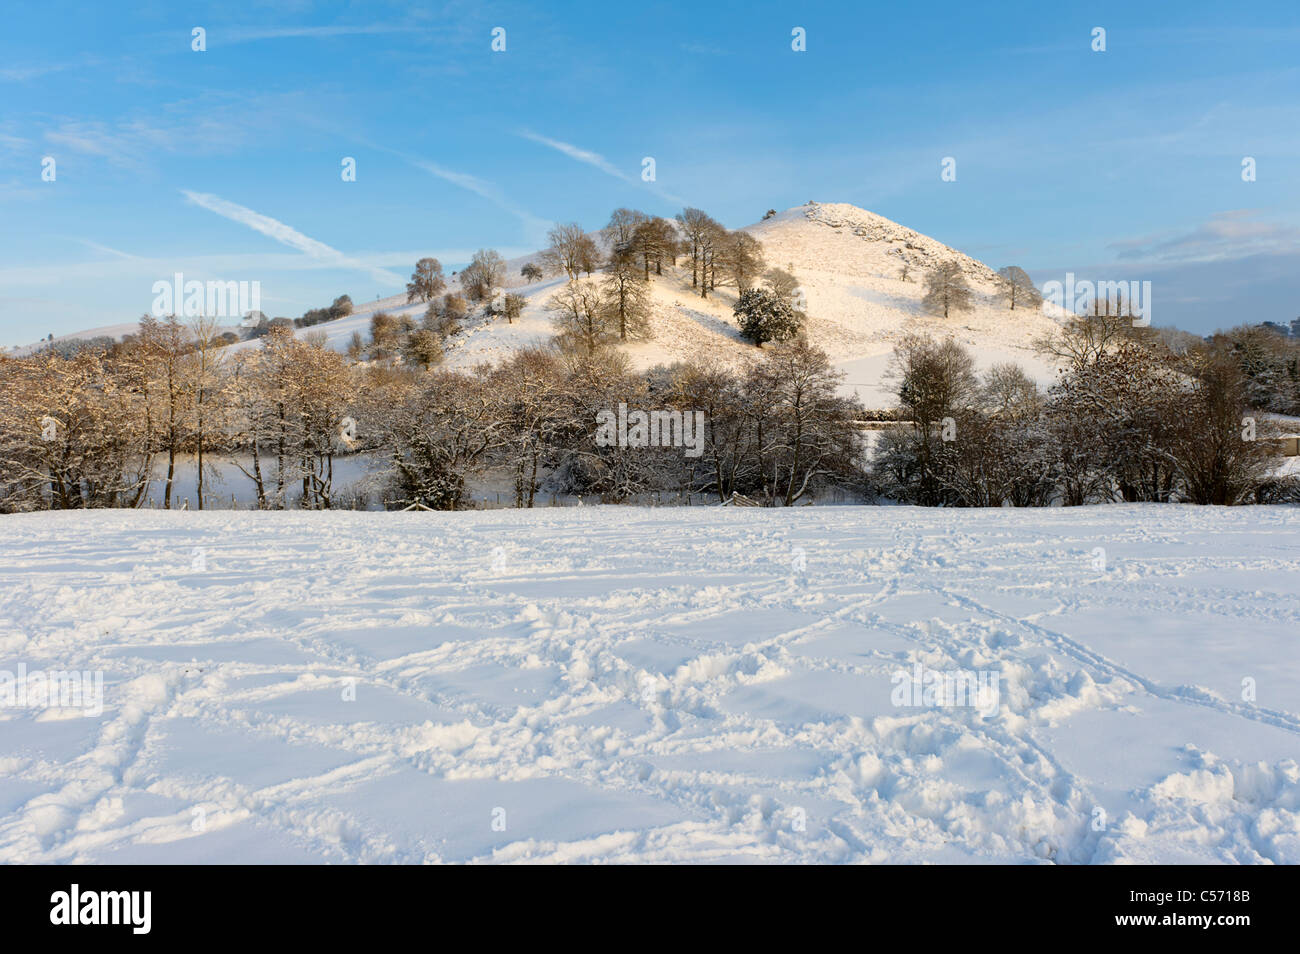 Borderlands gallois snowy winter scene, Powys, Wales Banque D'Images